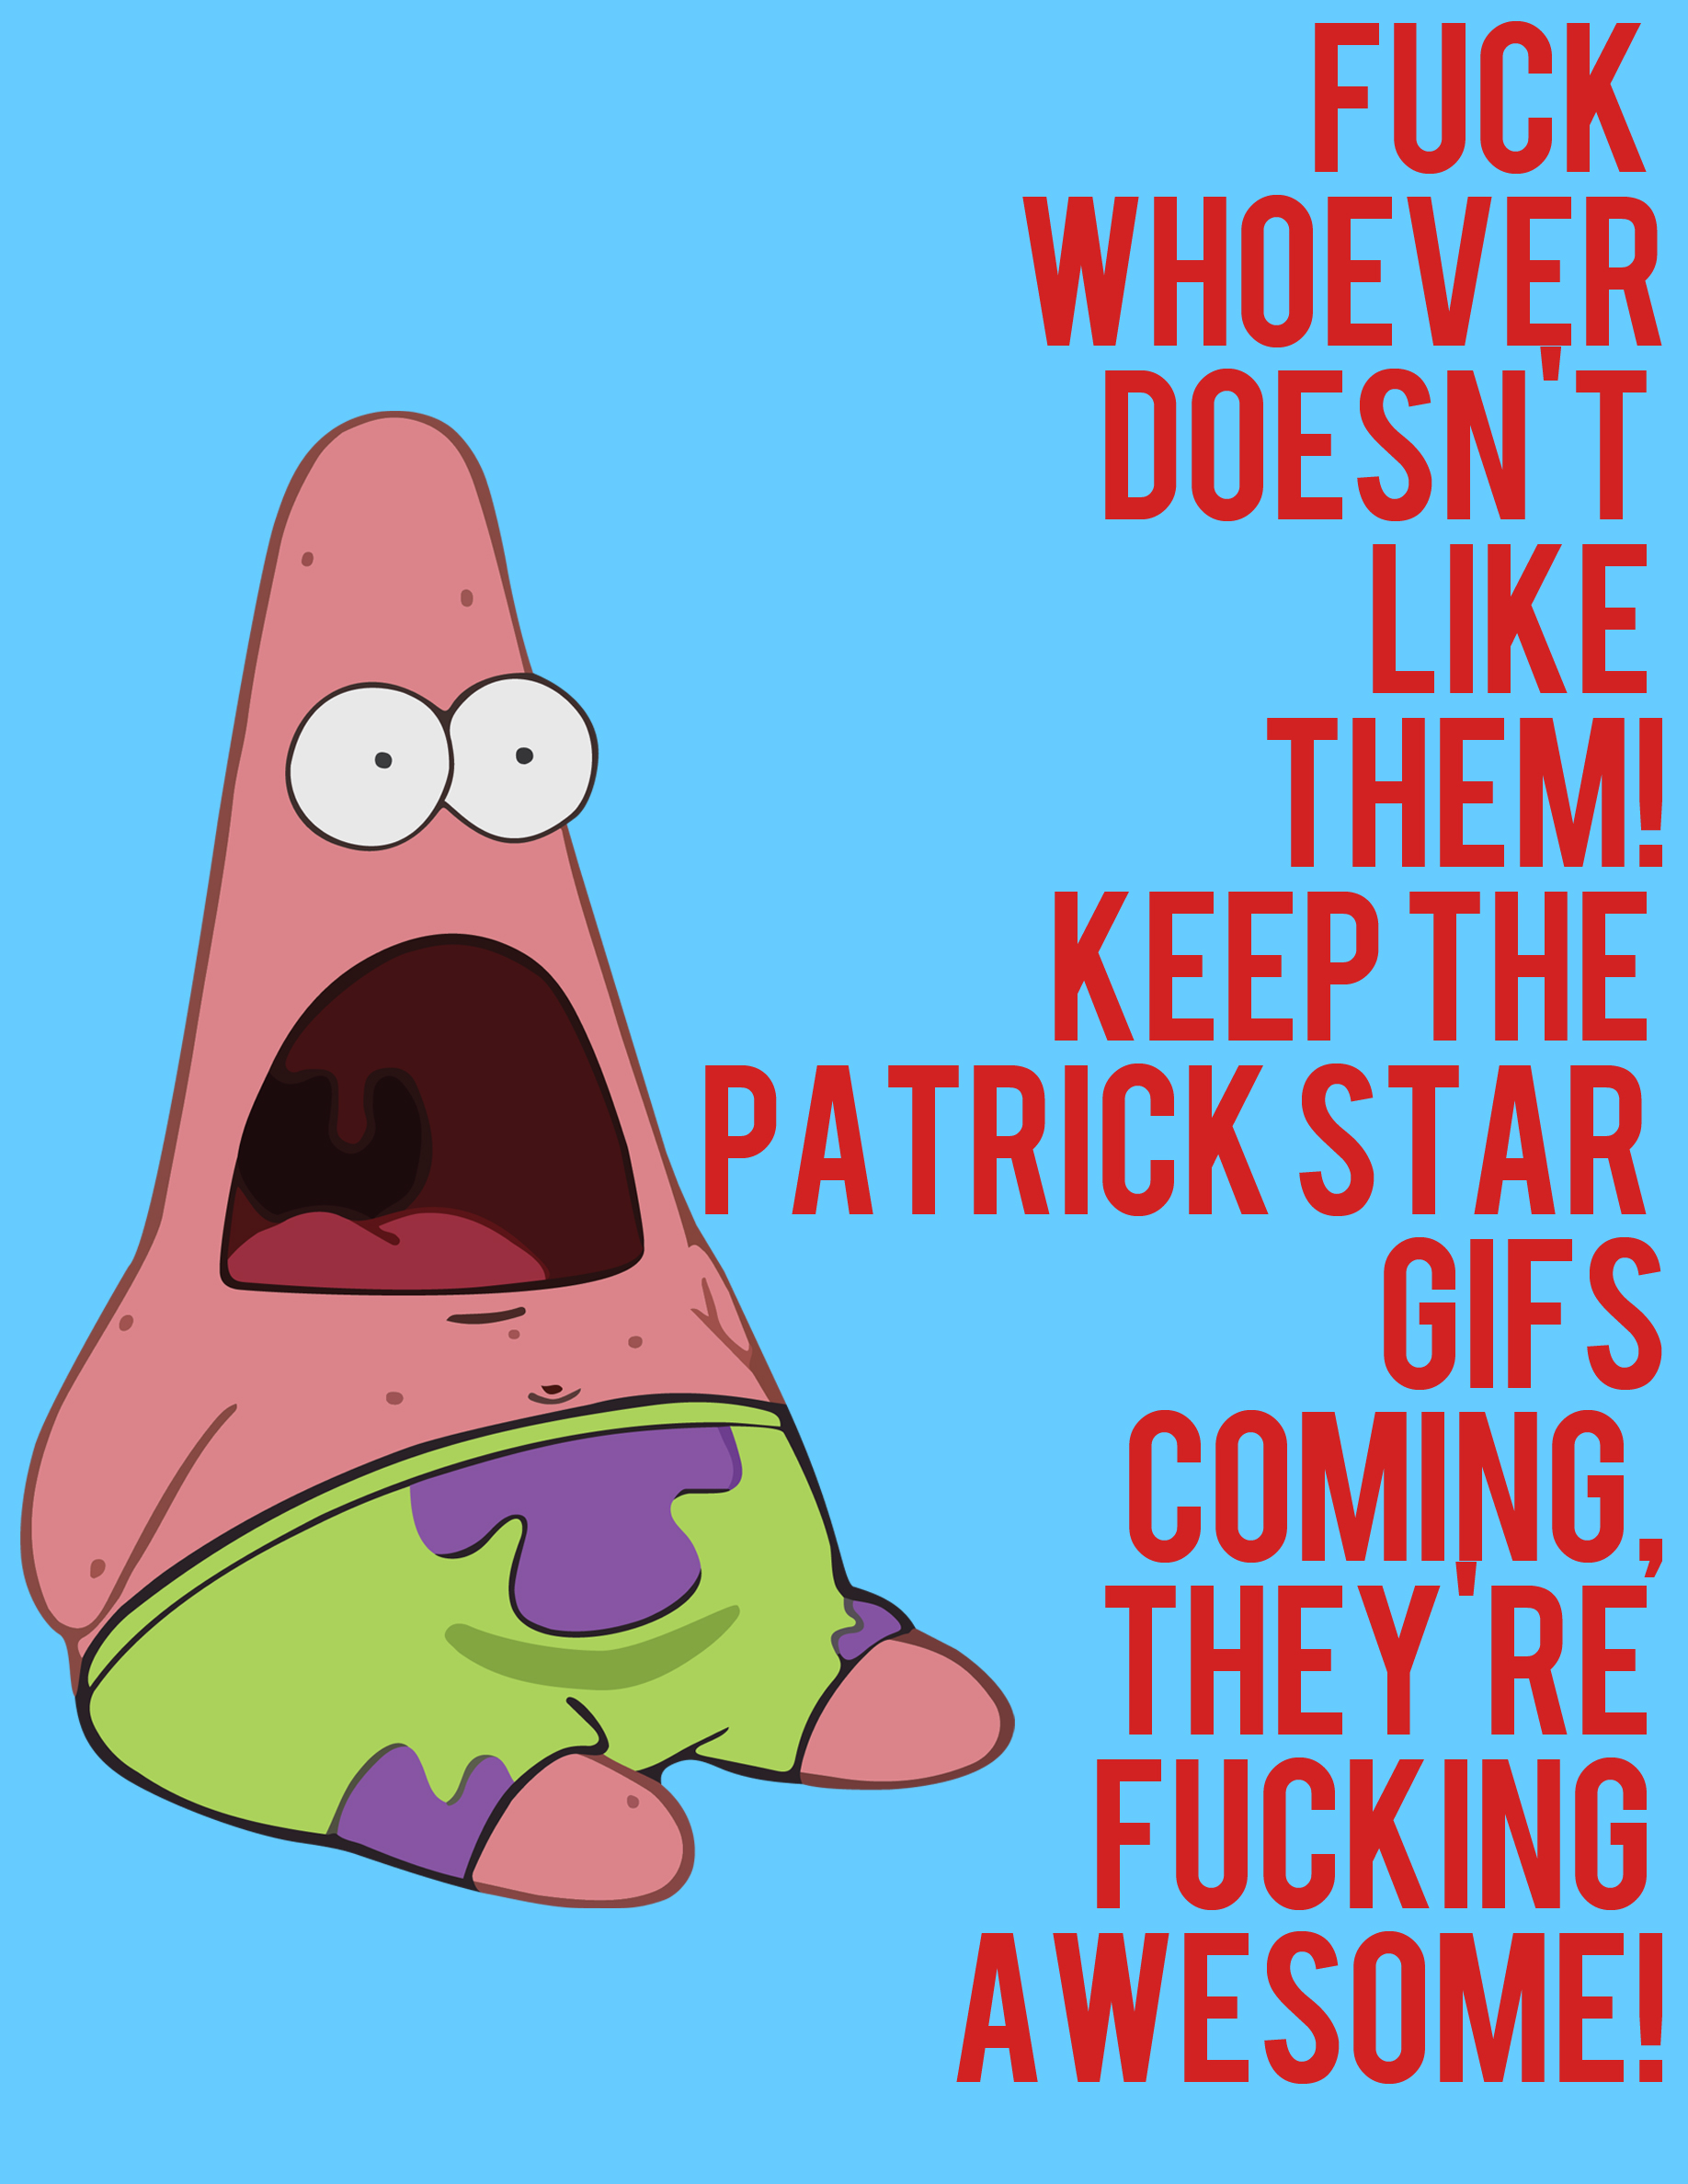 I Vote Patrick Star!